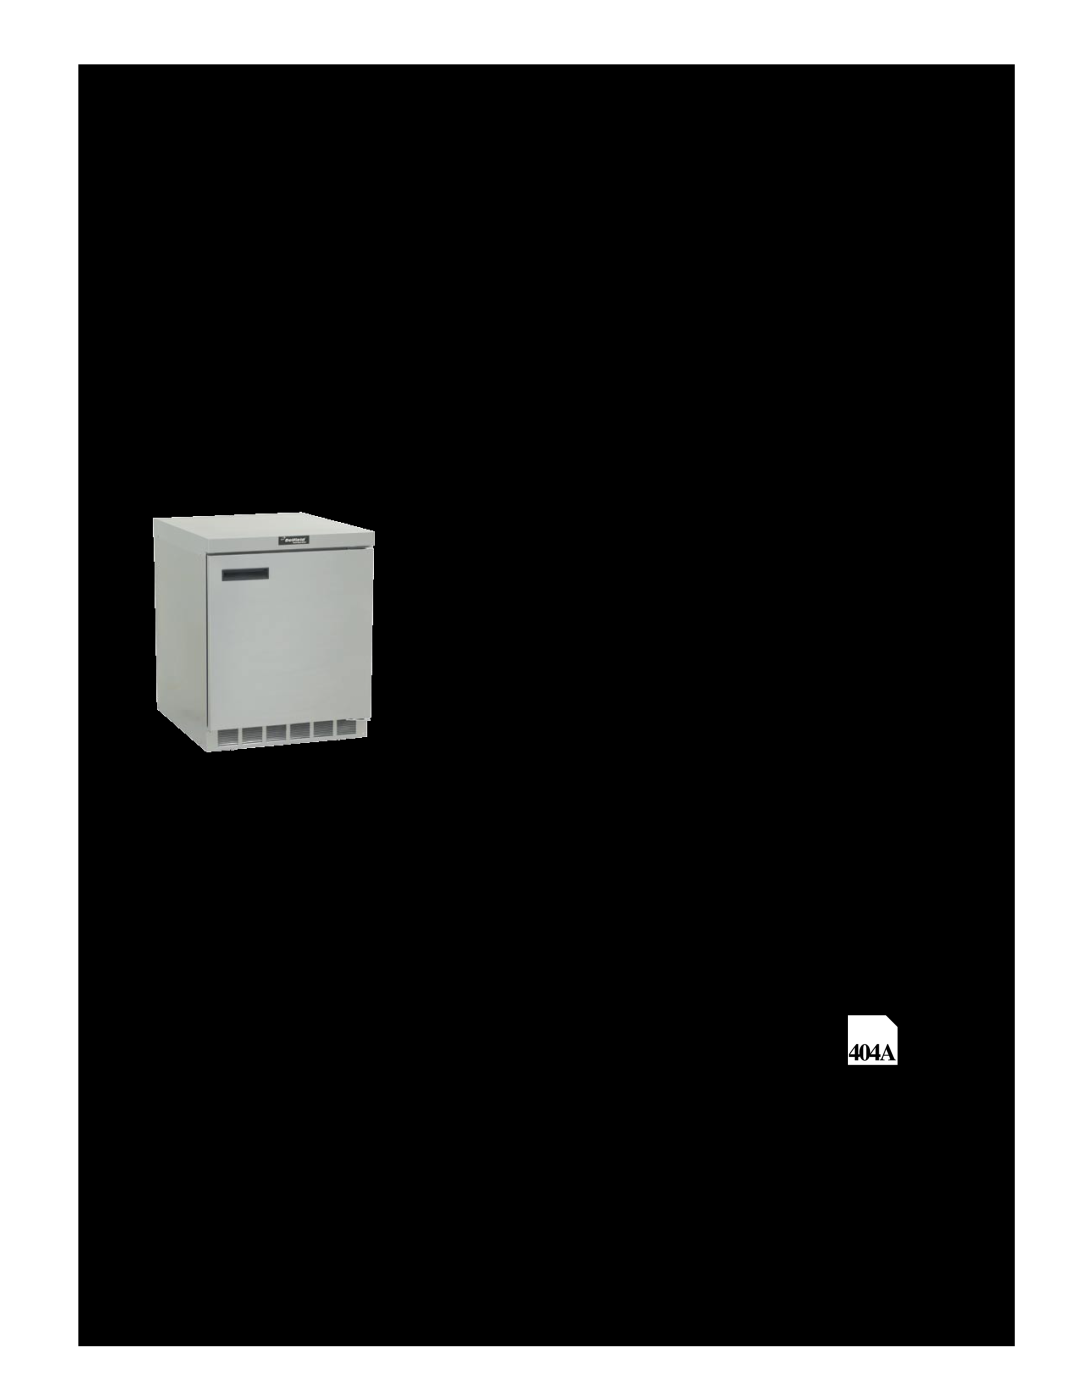 Delfield specifications UC4432N Undercounter, Delfield, Front-Breathing Undercounter Refrigerators, Models, UCD4432N 